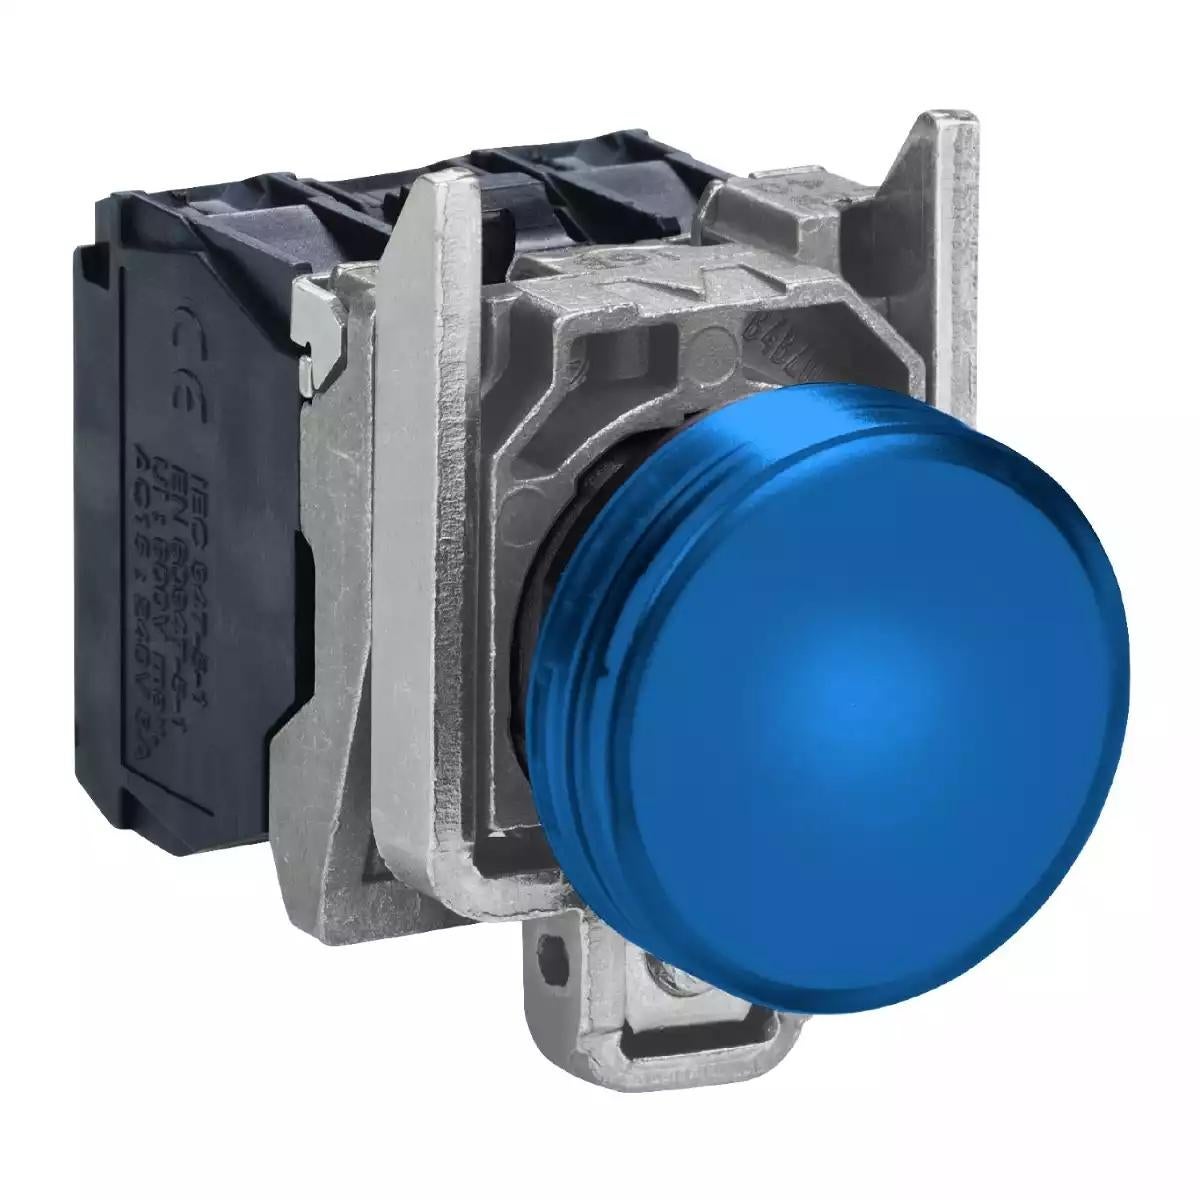 Complete pilot light, Harmony XB4, round Ø22 mm, IP65, blue, integral LED, 24 V, lugs, ATEX